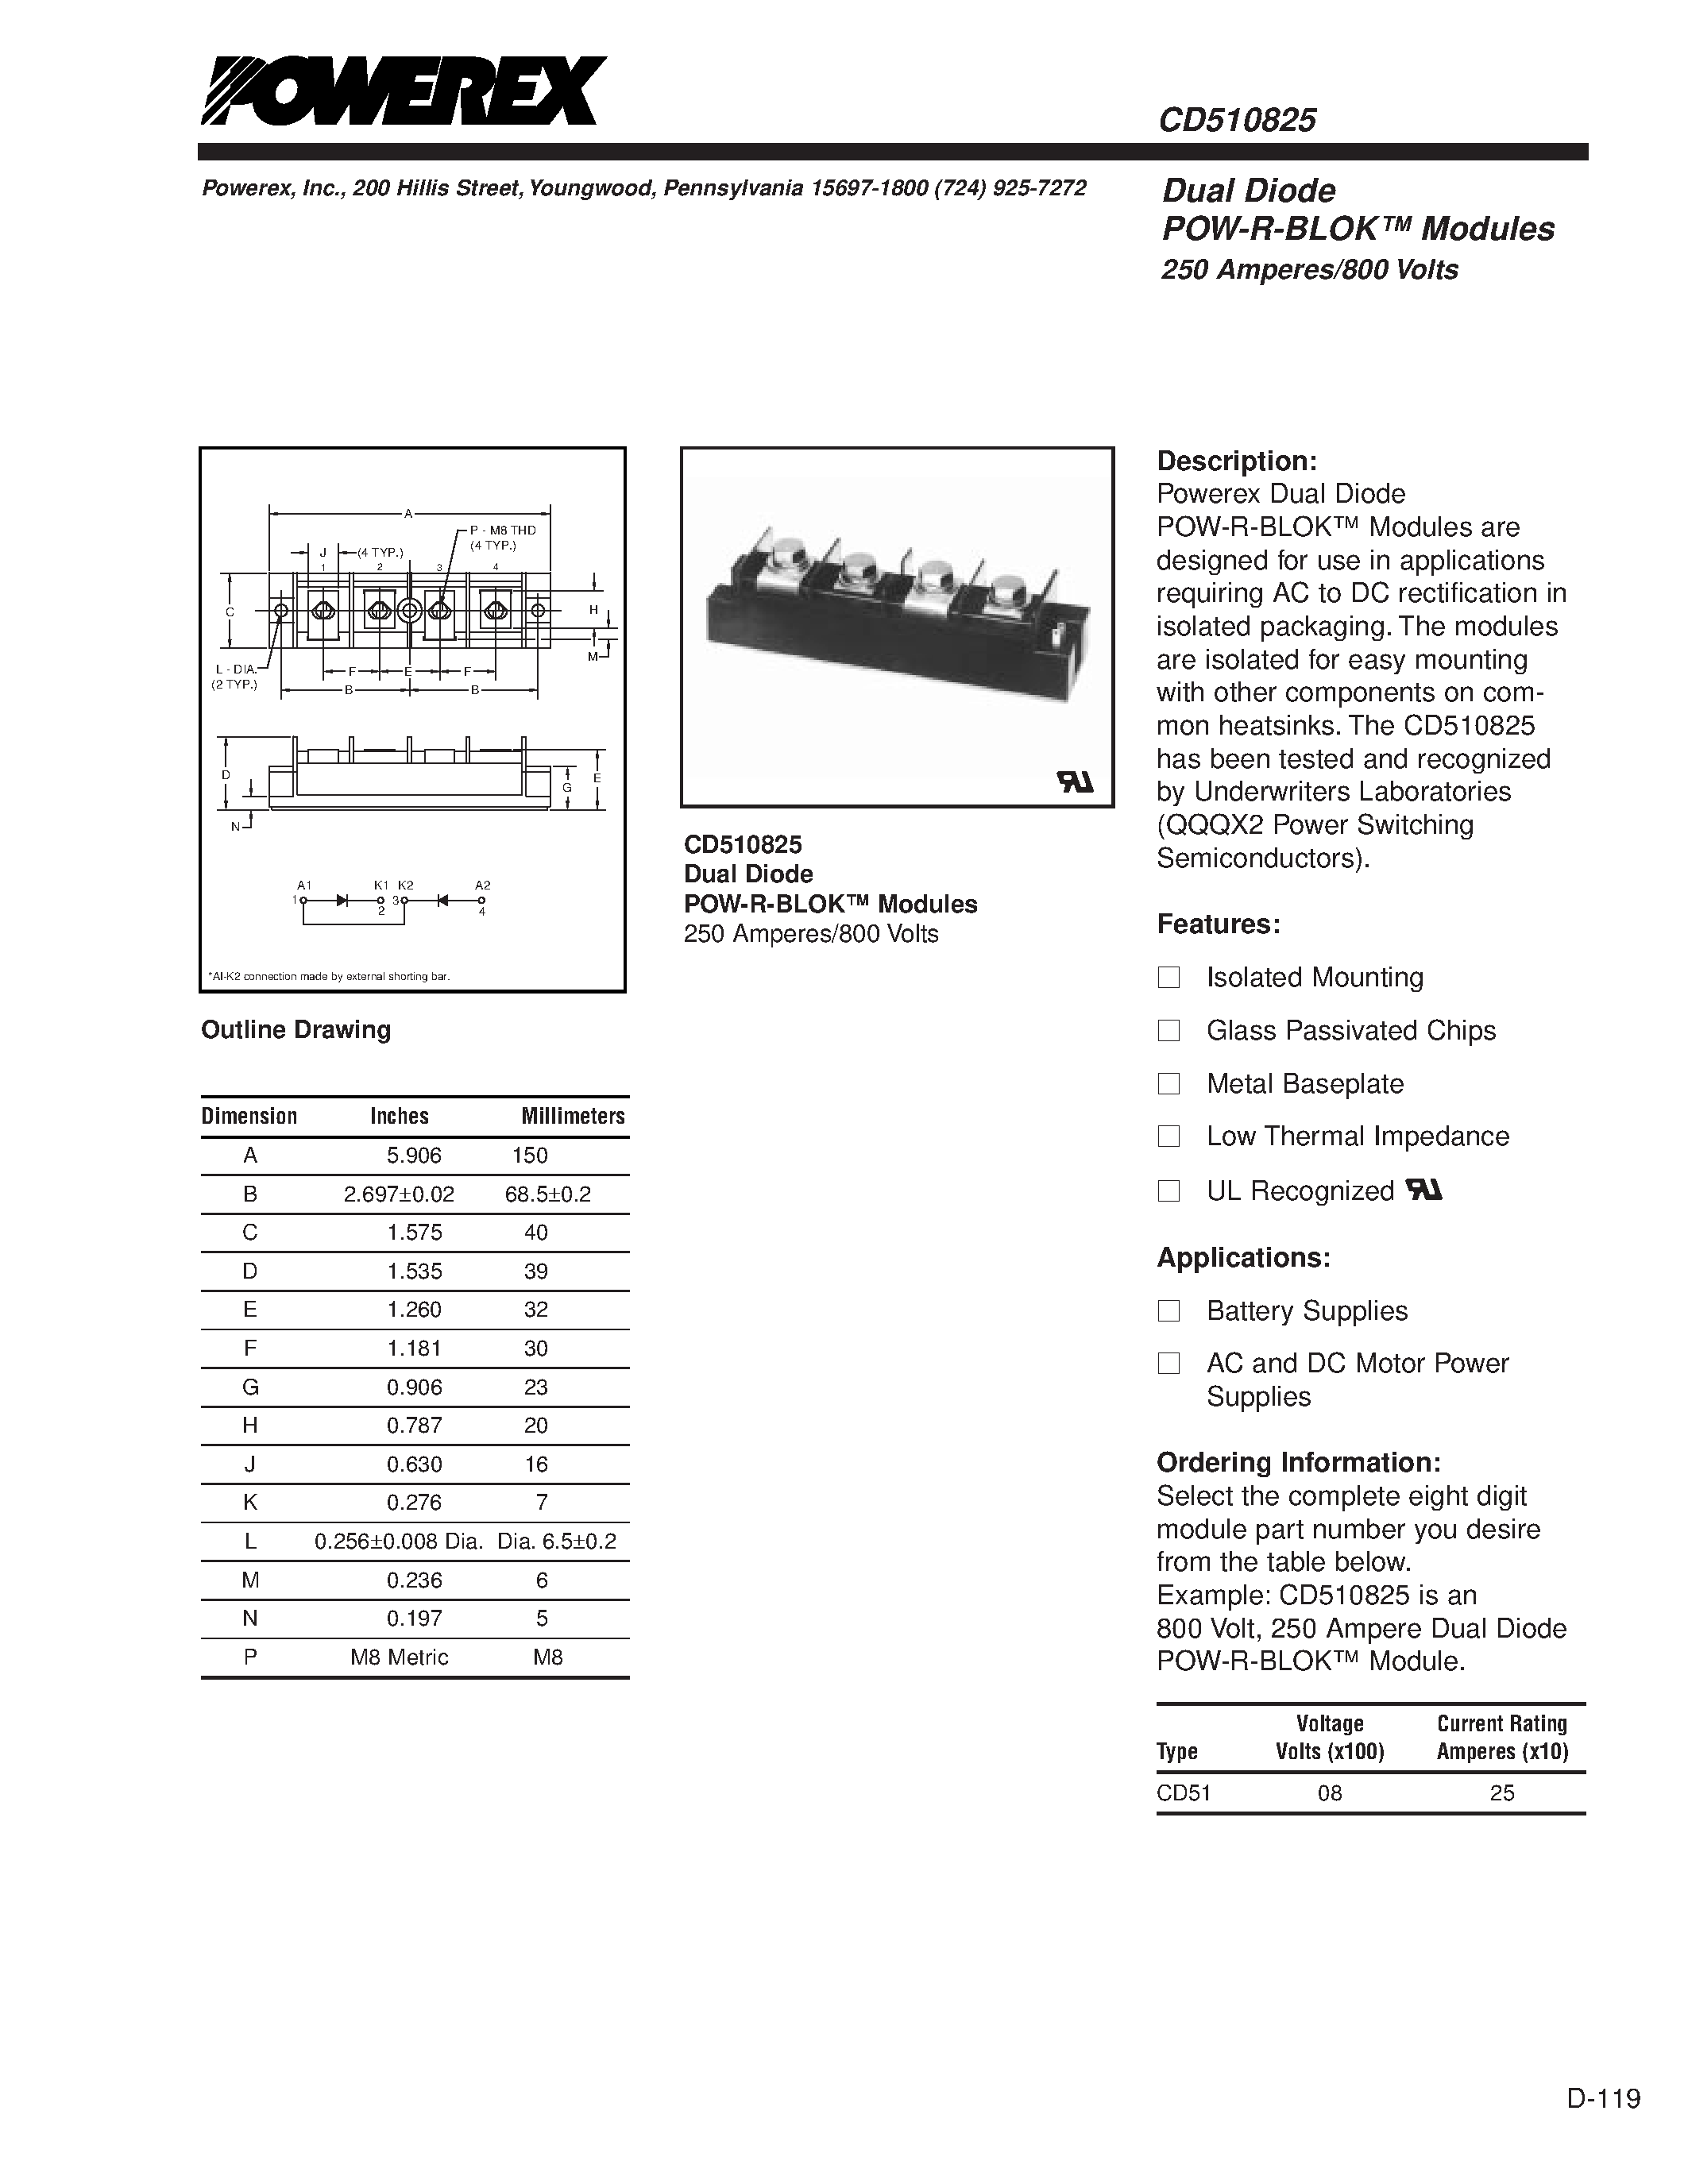 Datasheet CD510825 - Dual Diode POW-R-BLOK Modules 250 Amperes/800 Volts page 1